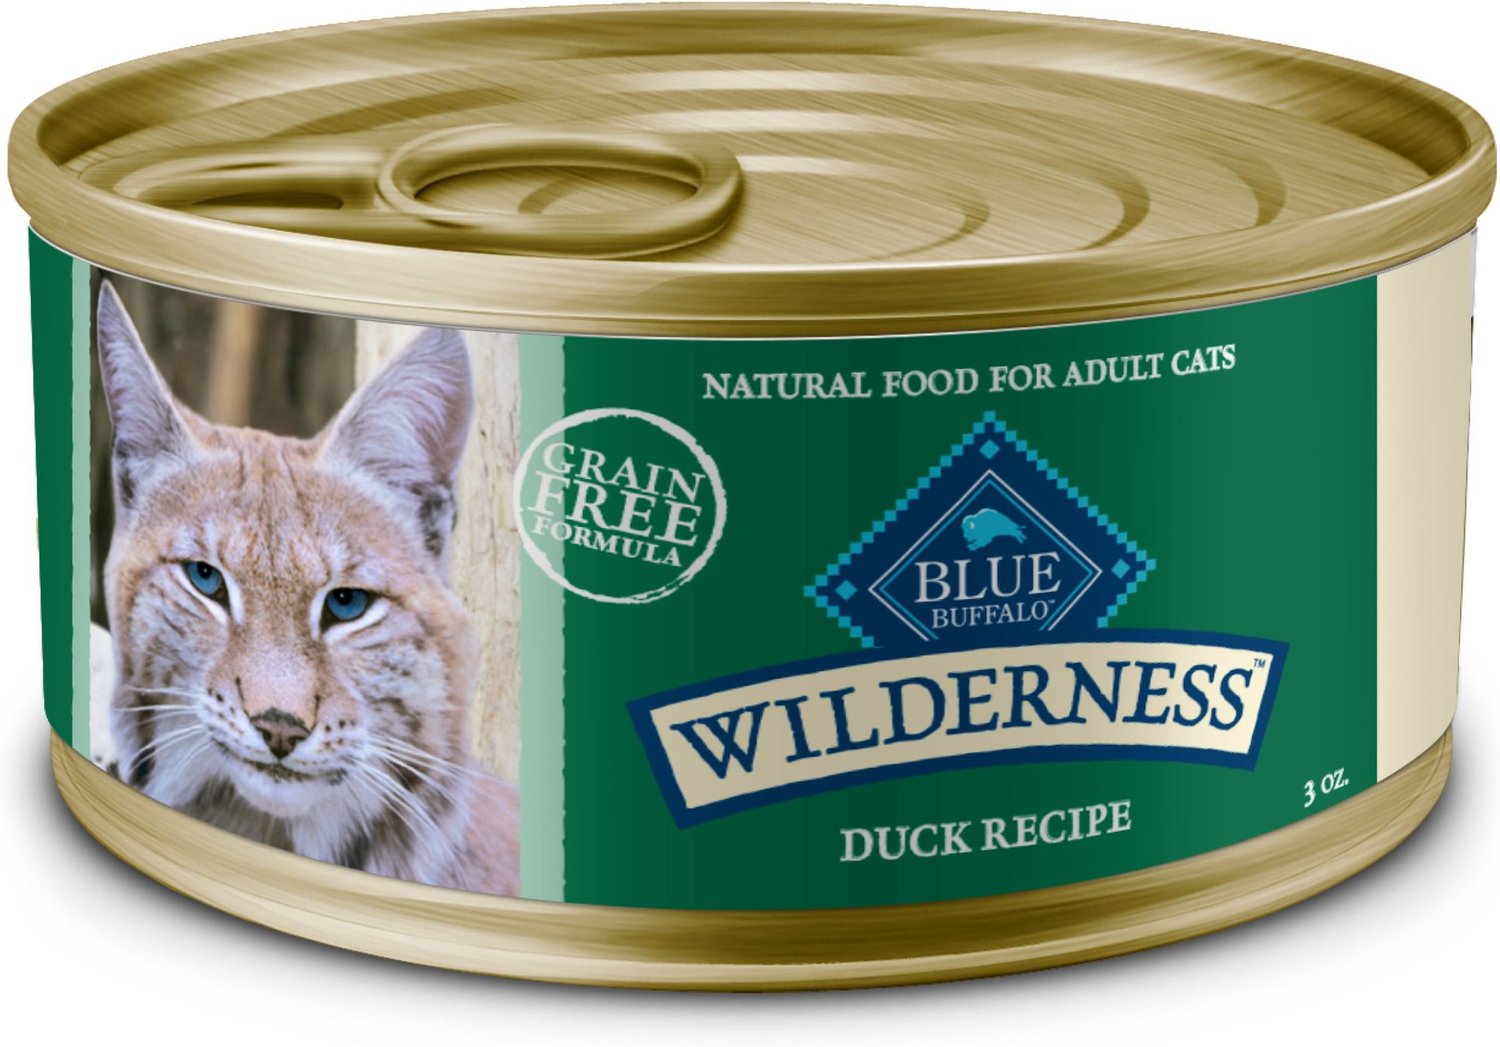 BLUE BUFFALO Wilderness Duck GrainFree Canned Cat Food, 3oz, case of